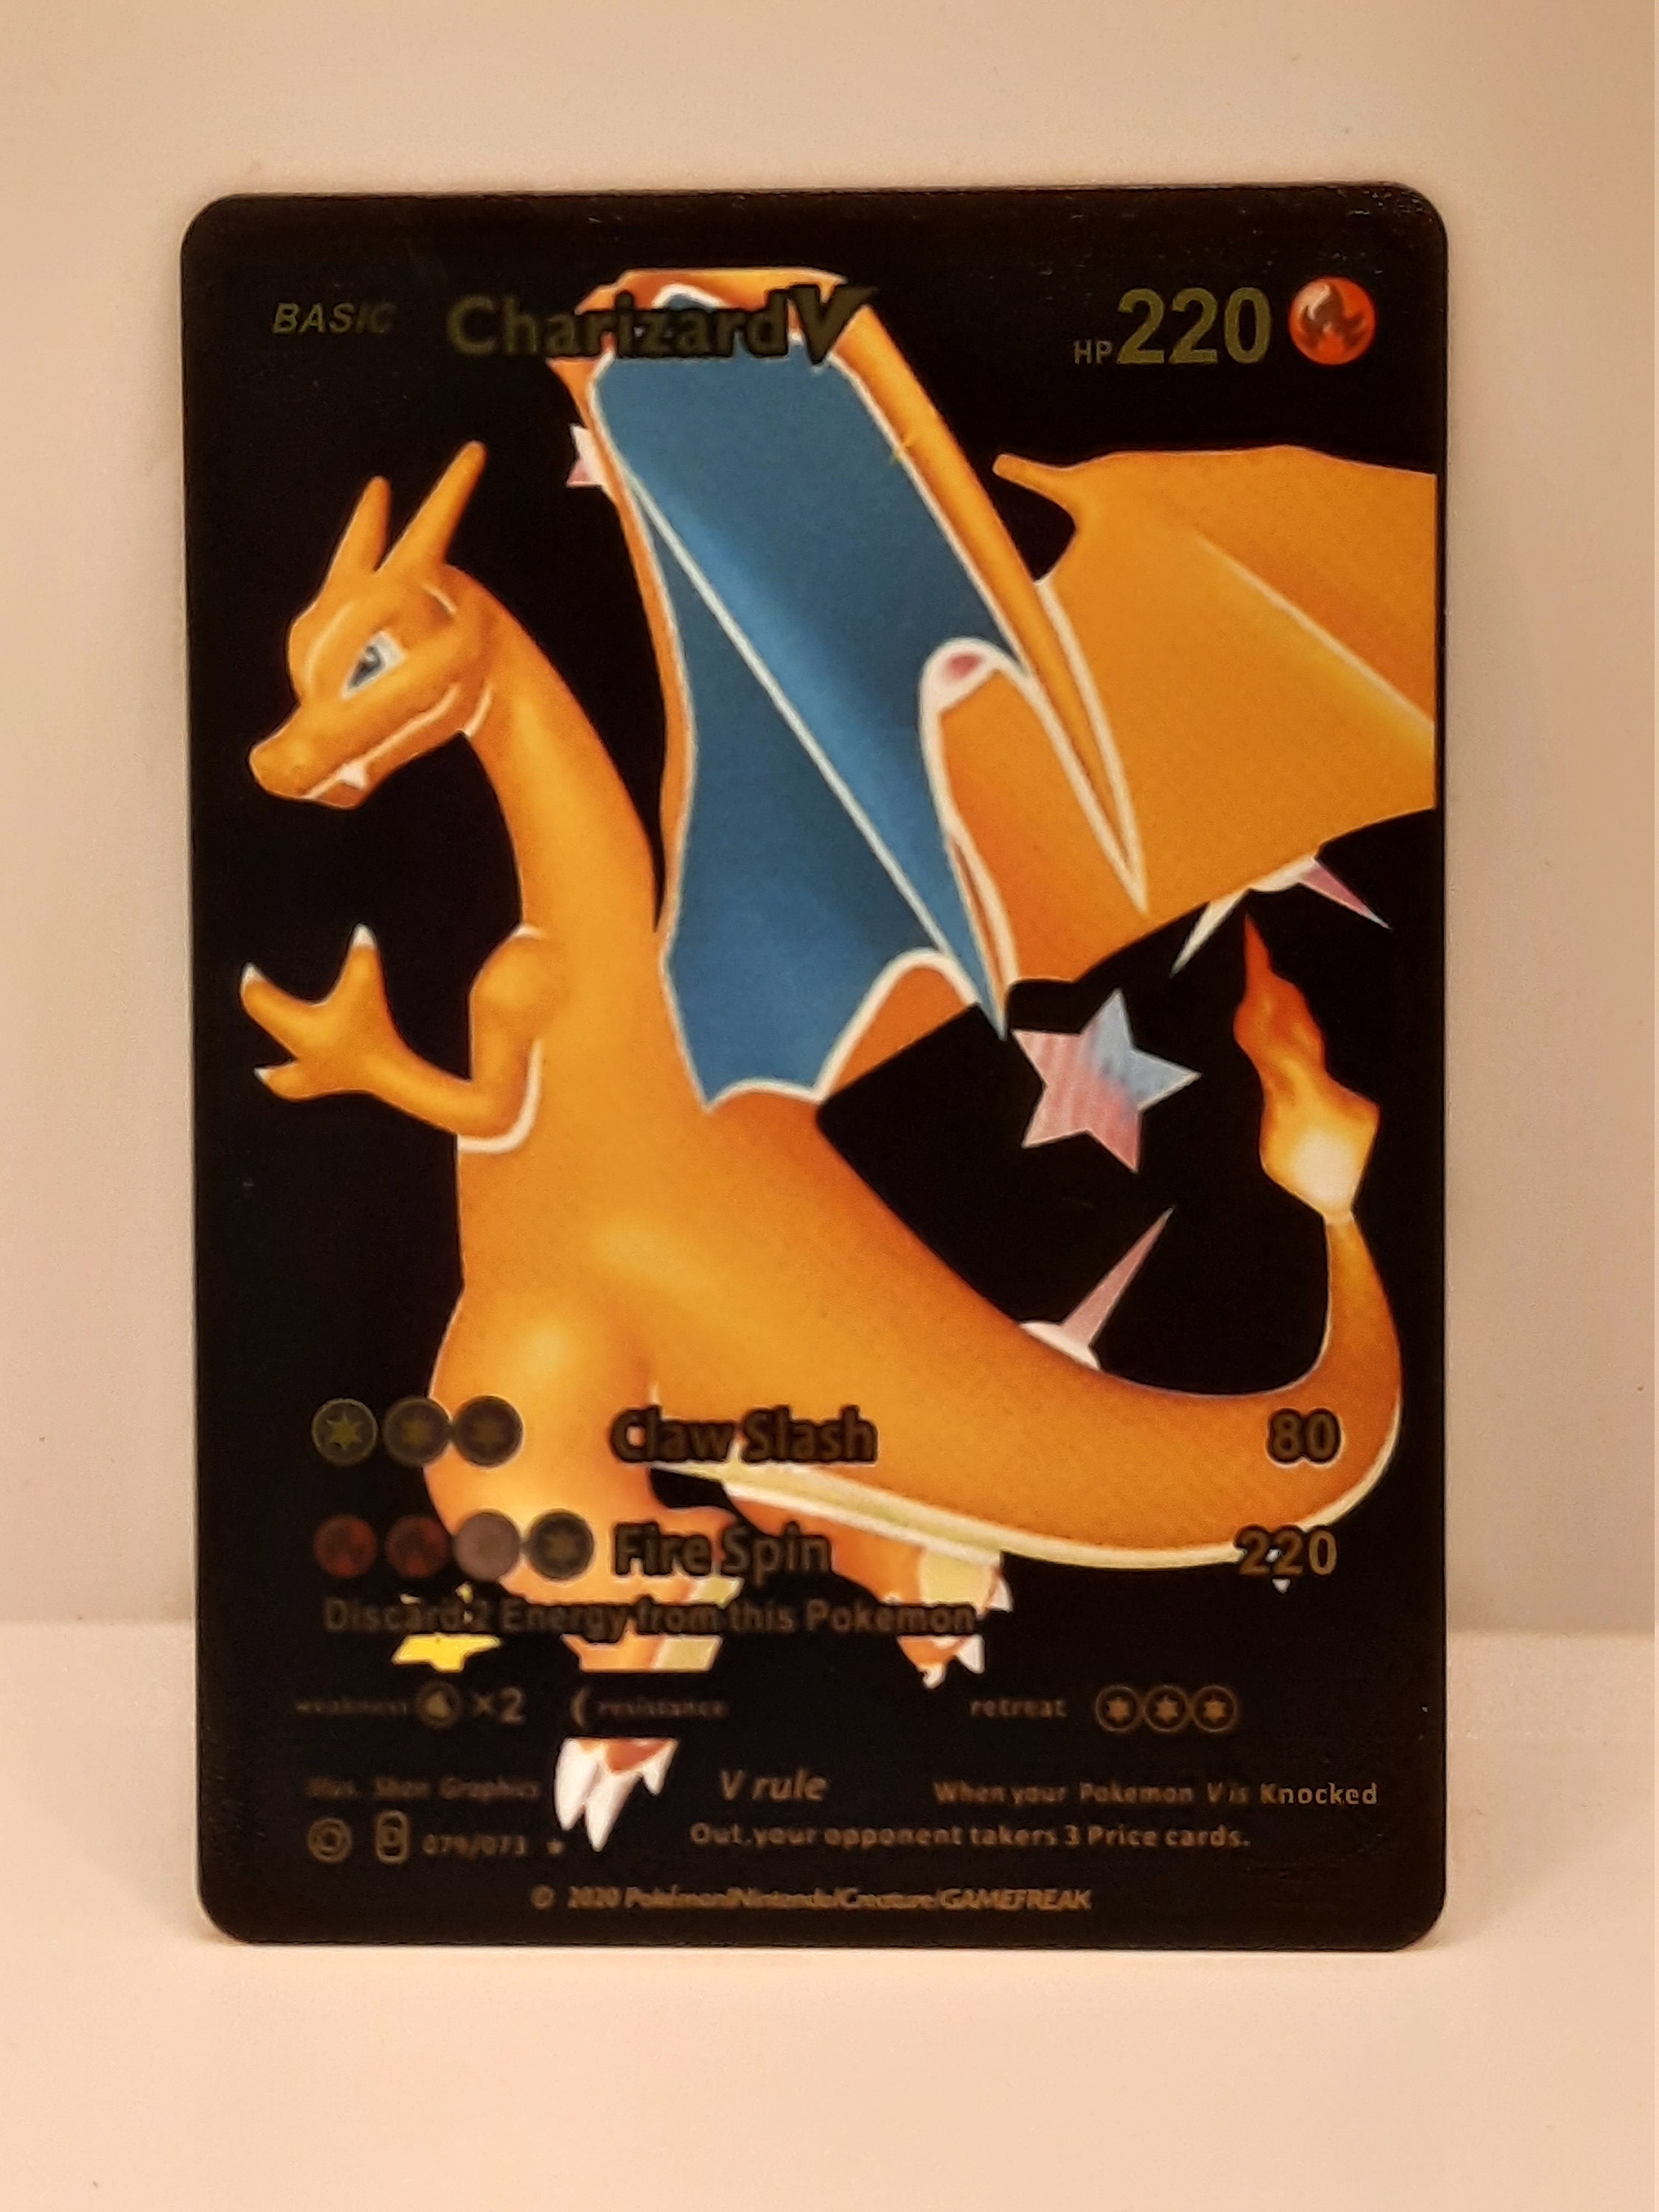 Carta Pokémon Customizada Charizard V Shiny Metal Dourado